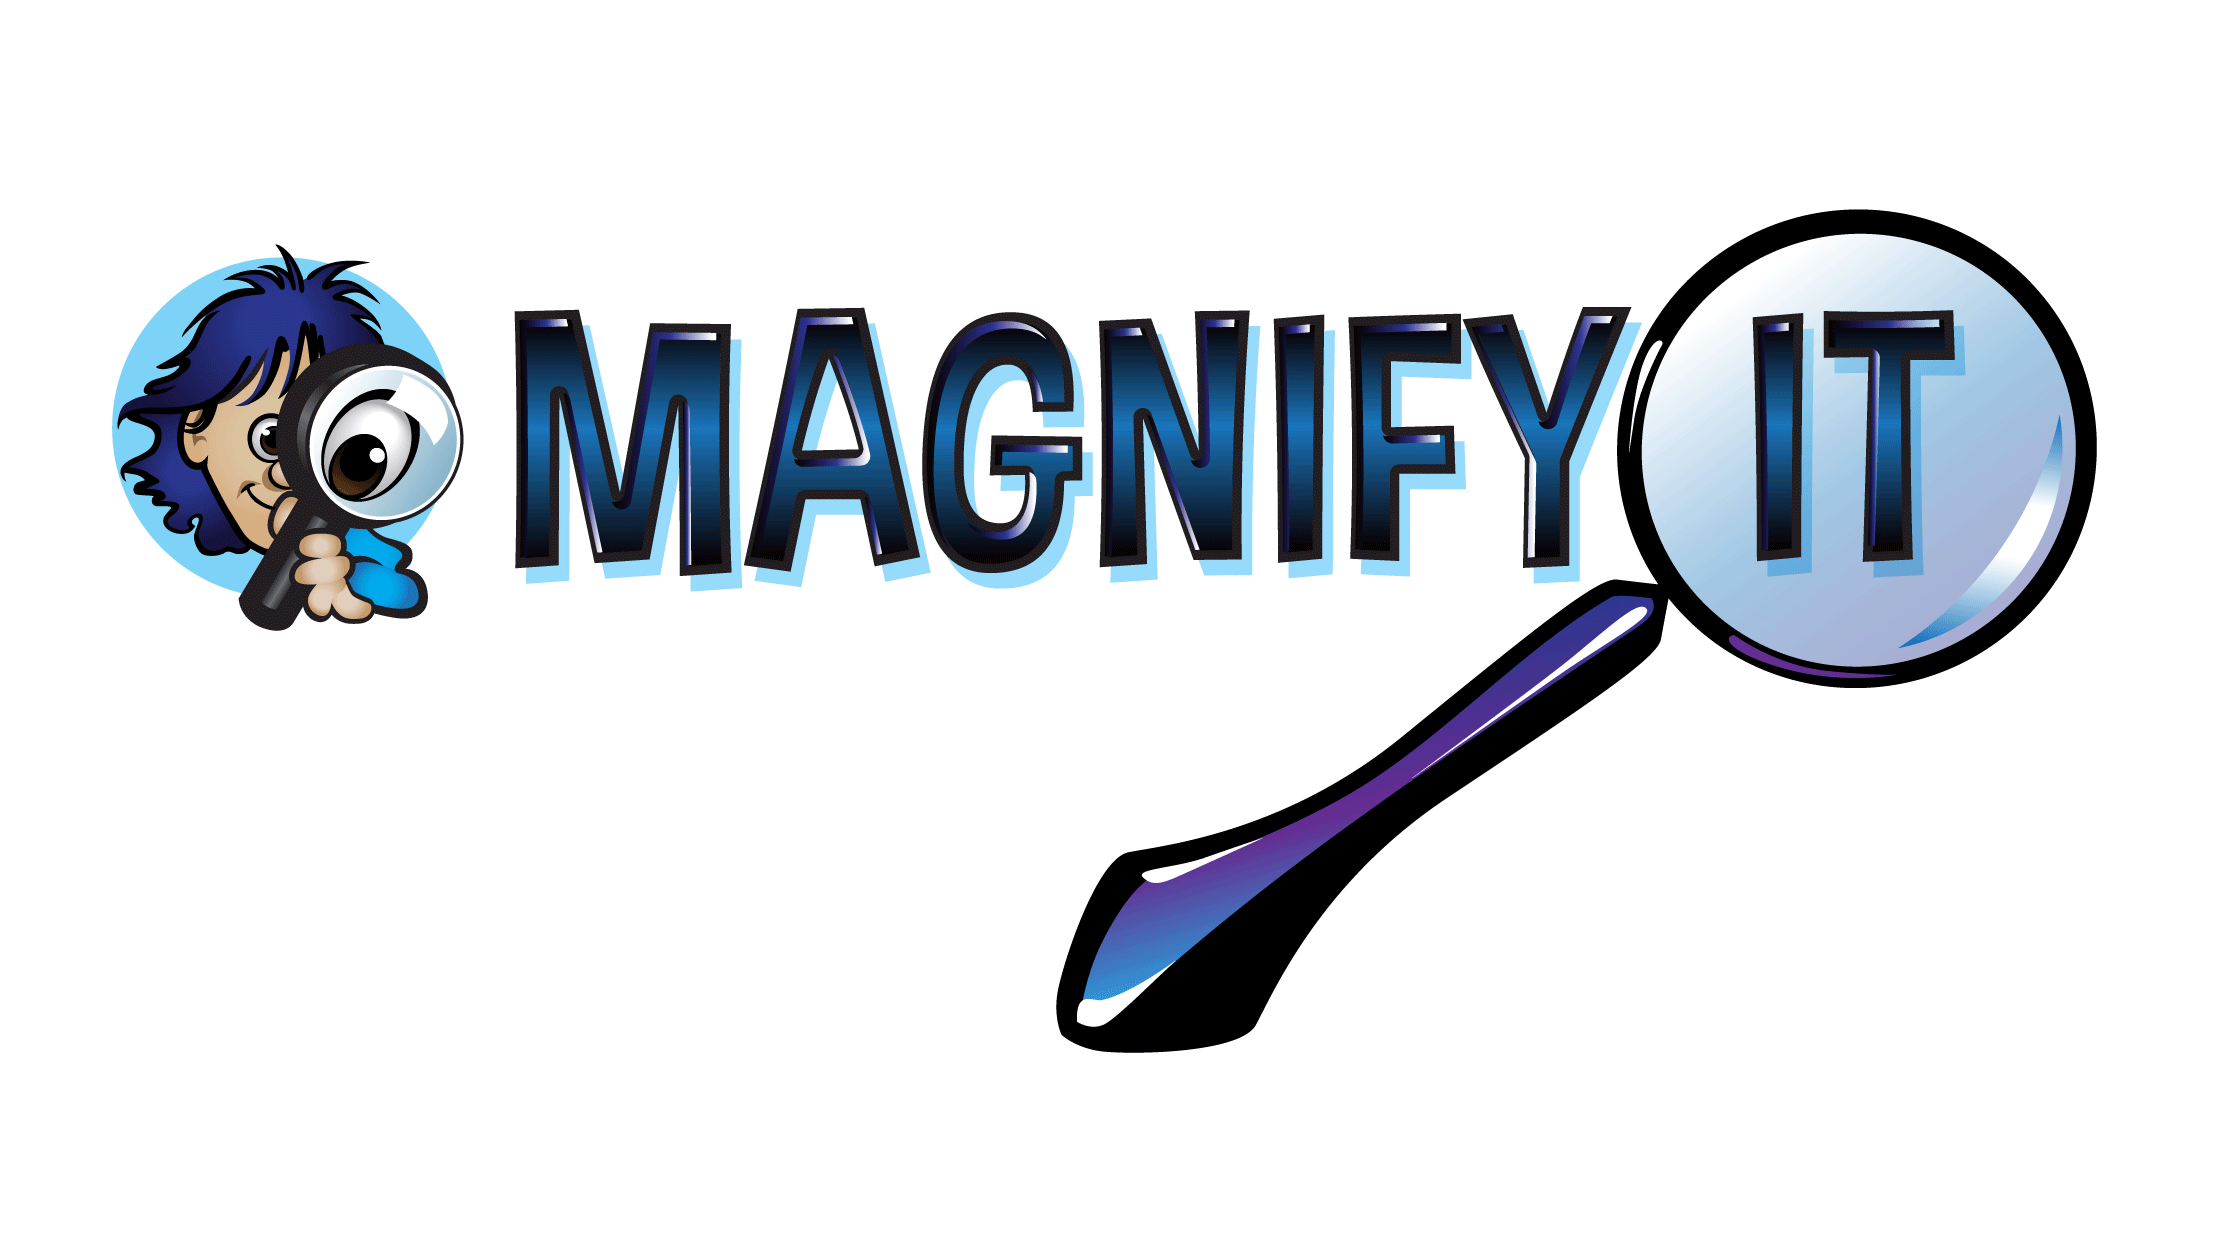 Magnify-It